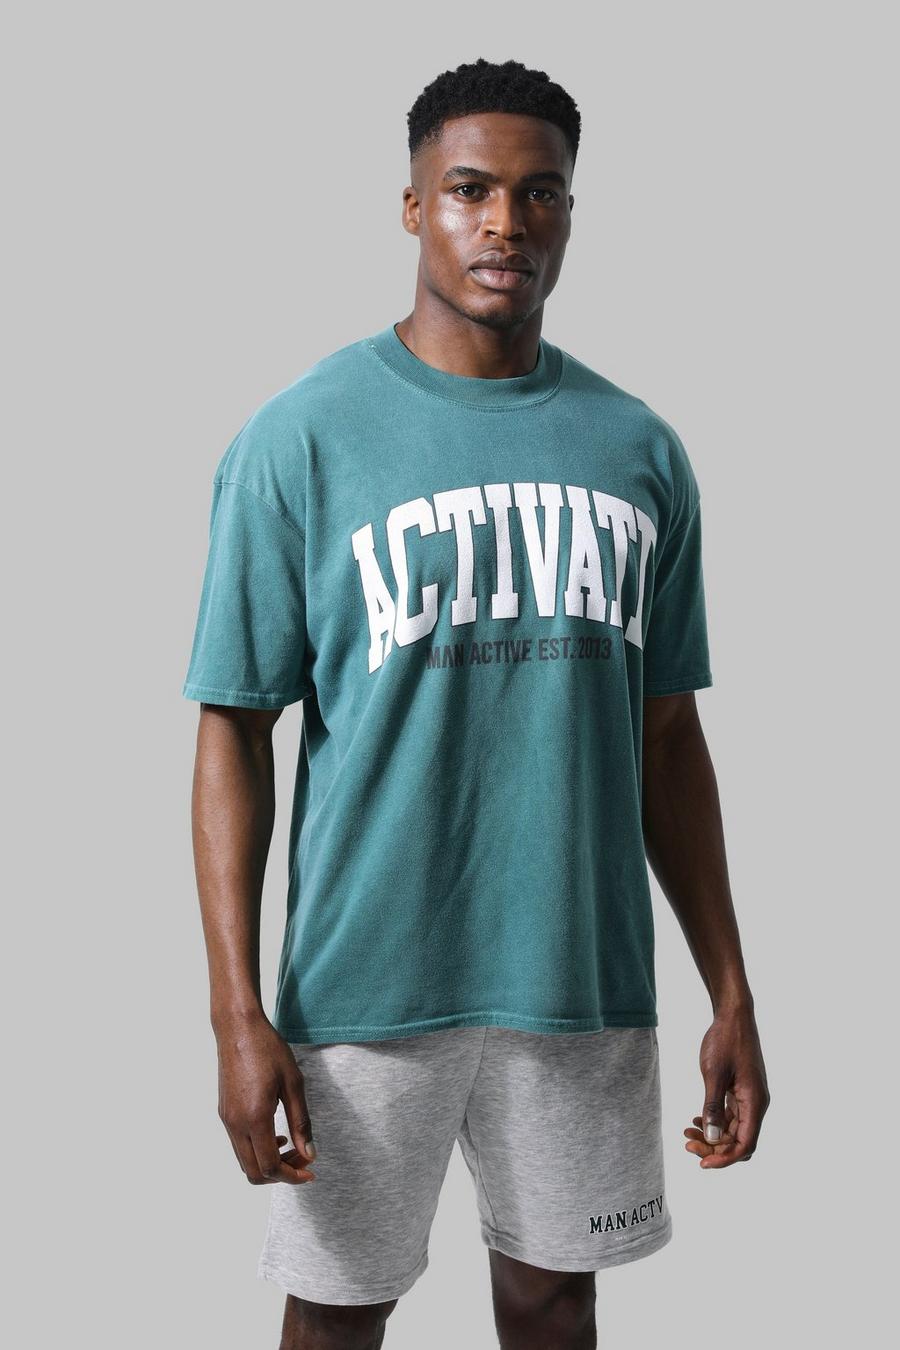 Teal green Man Active Overdye Activate T-shirt